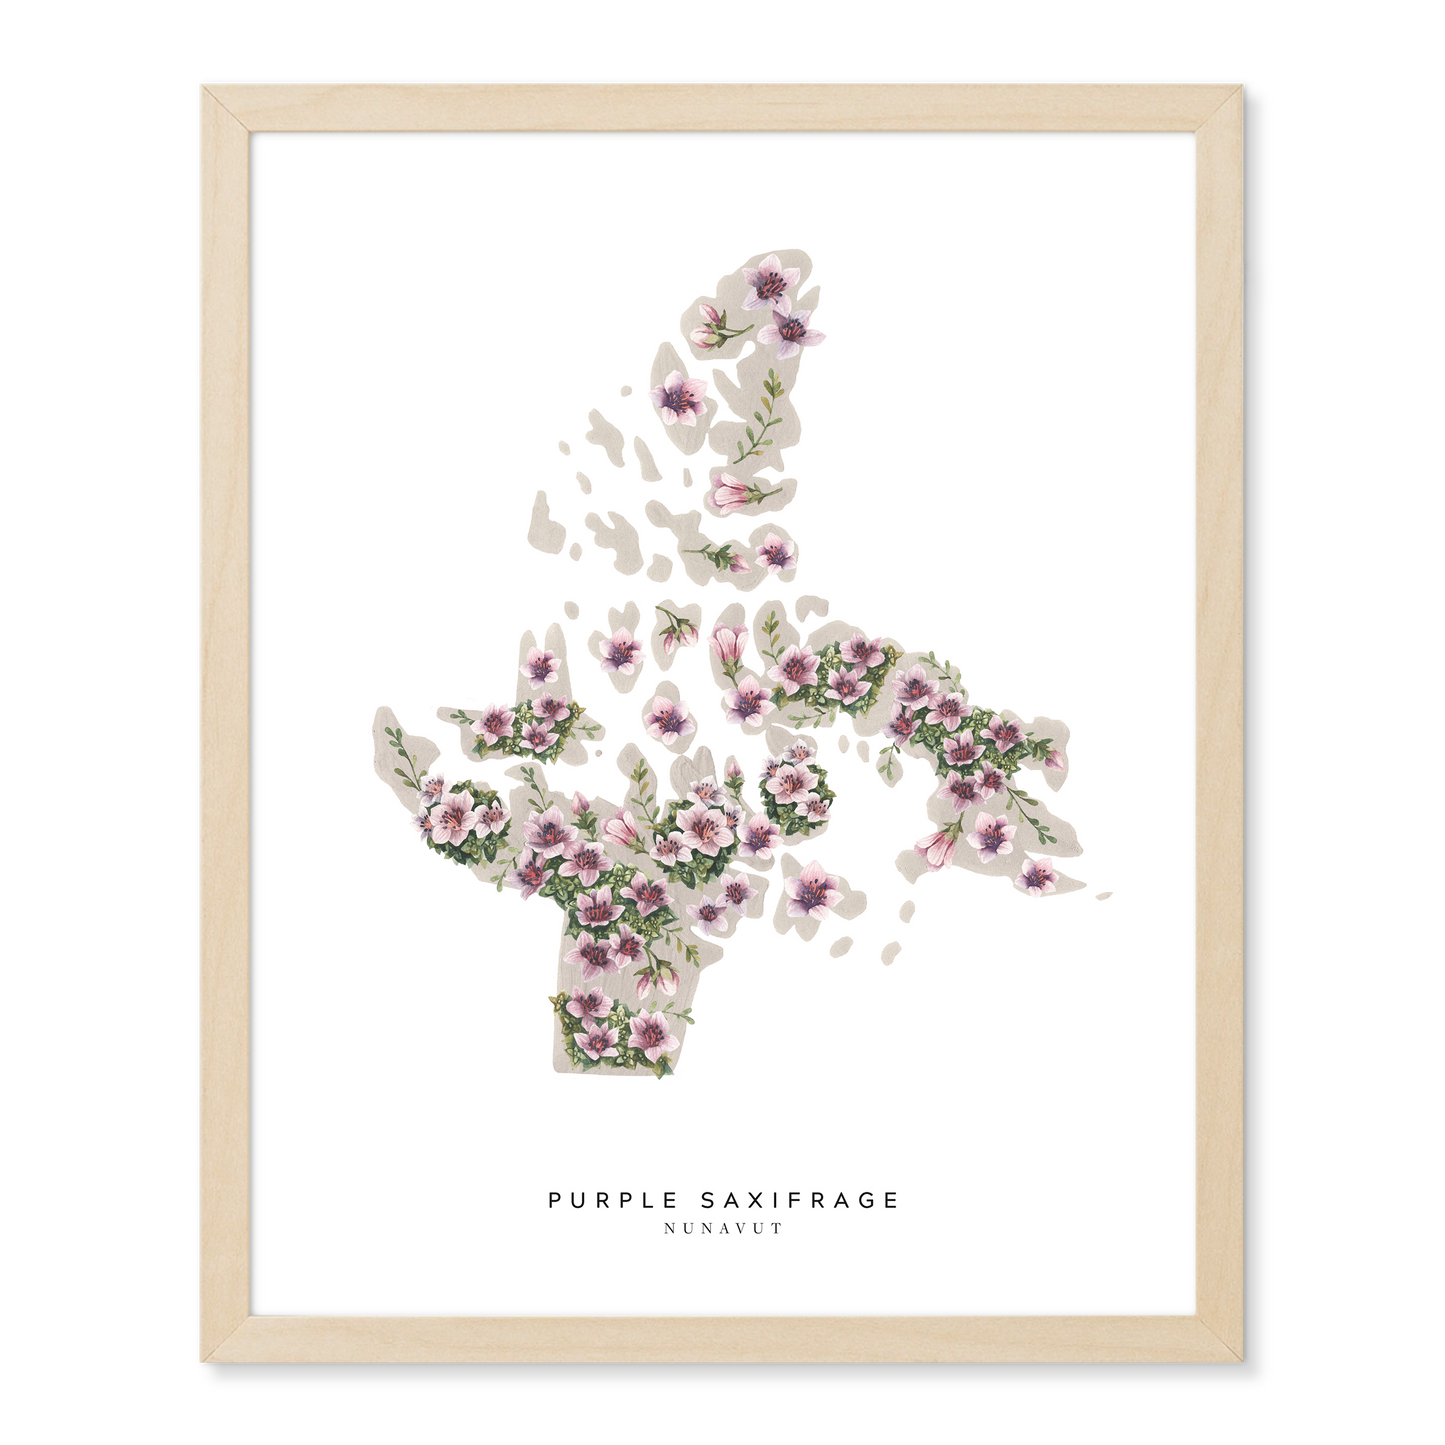 Nunavut Purple Saxifrage Print